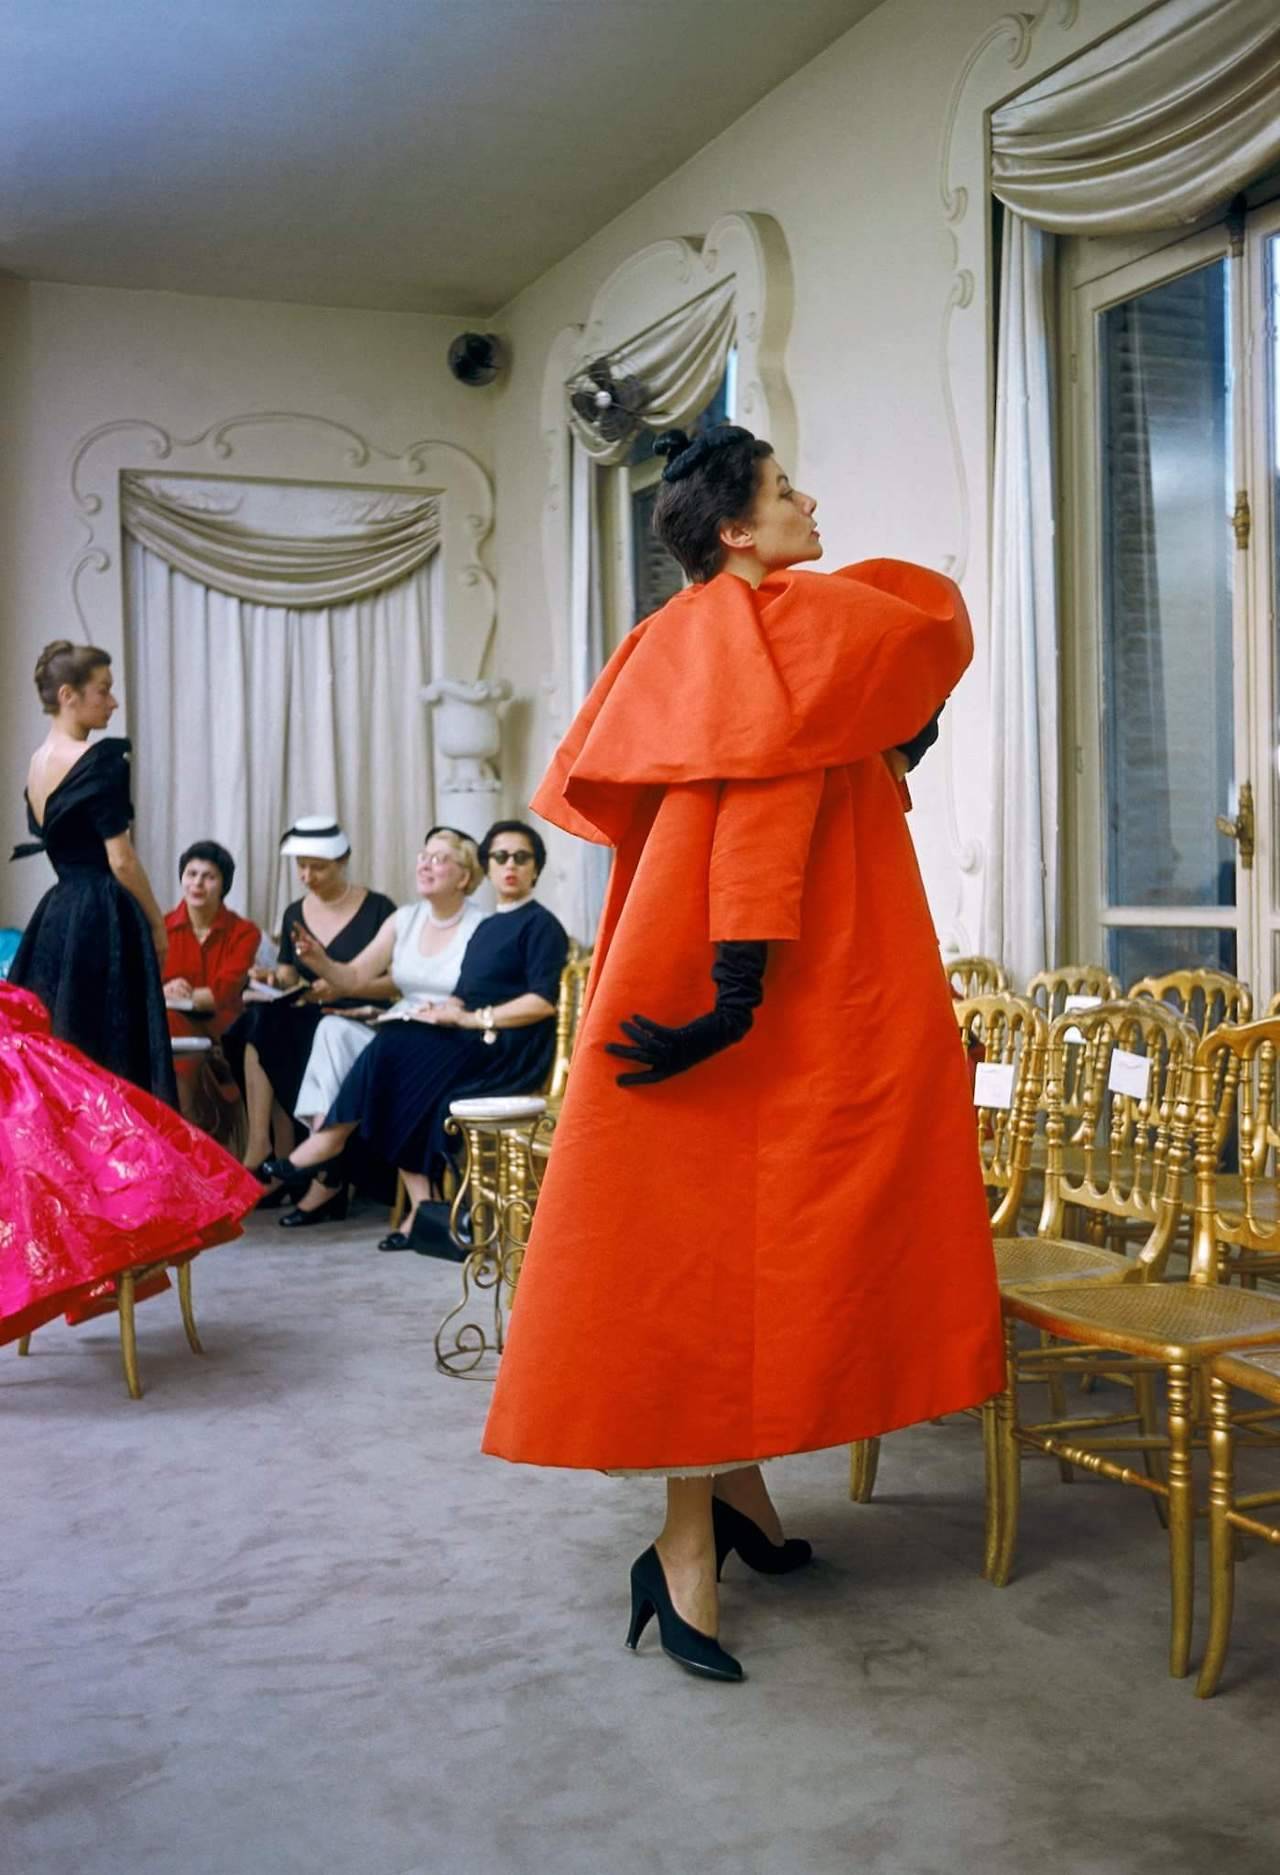 Mademoiselle Matea — Balenciaga fashion show in Paris, France in 1954